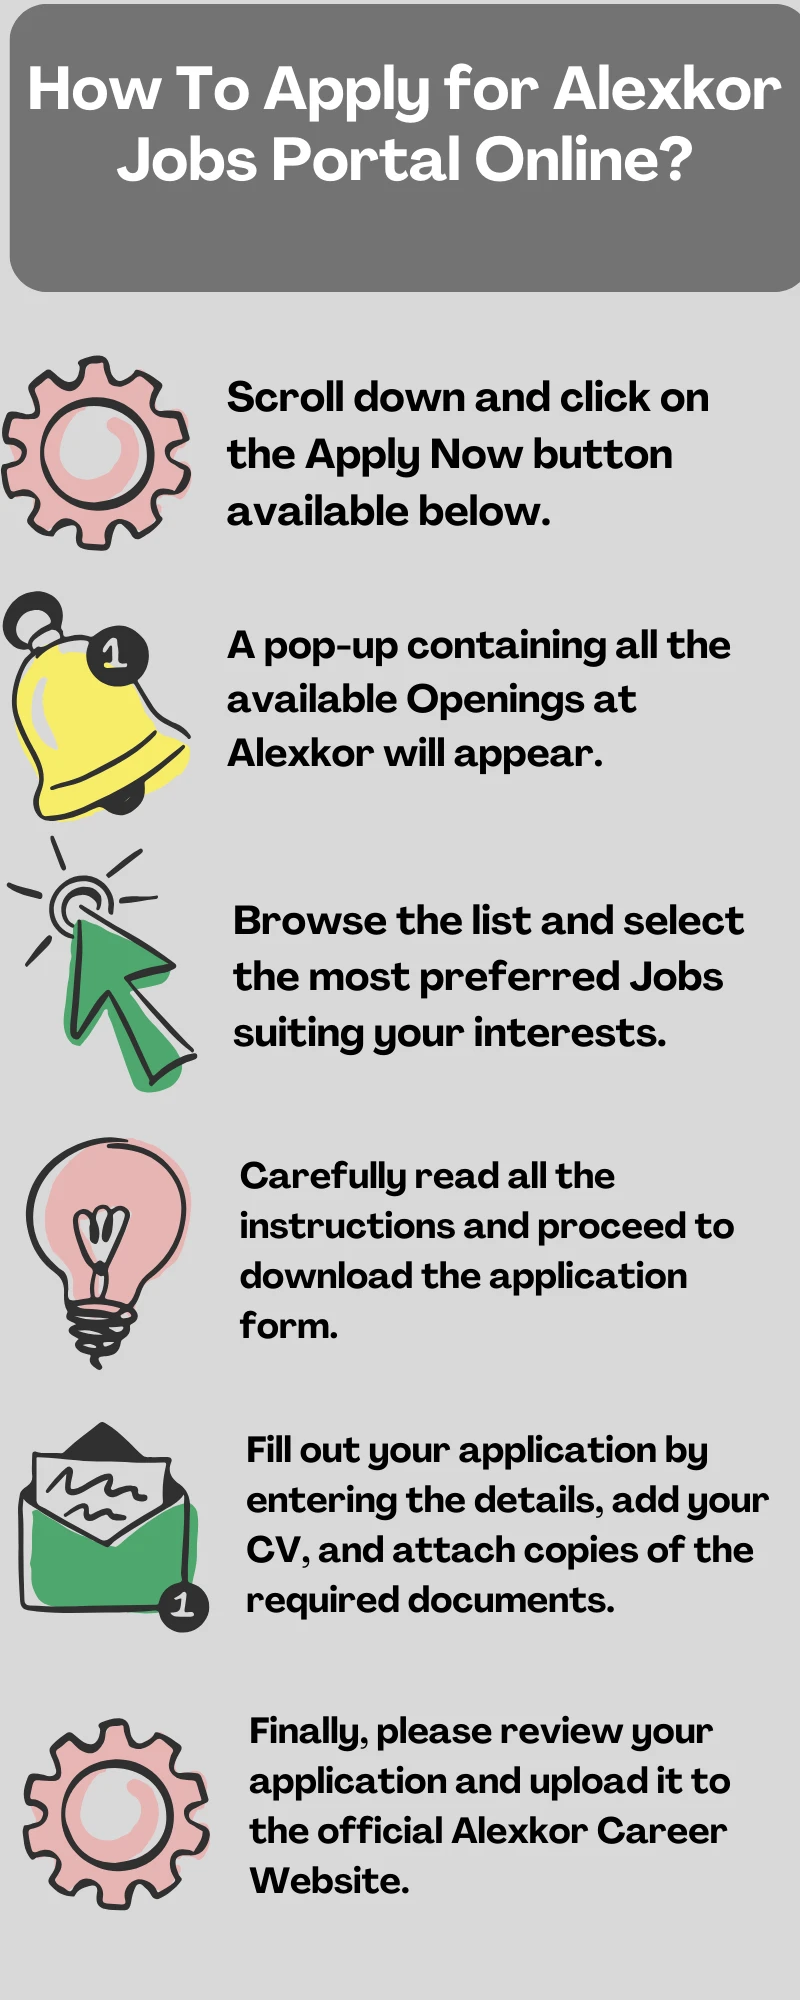 How To Apply for Alexkor Jobs Portal Online?